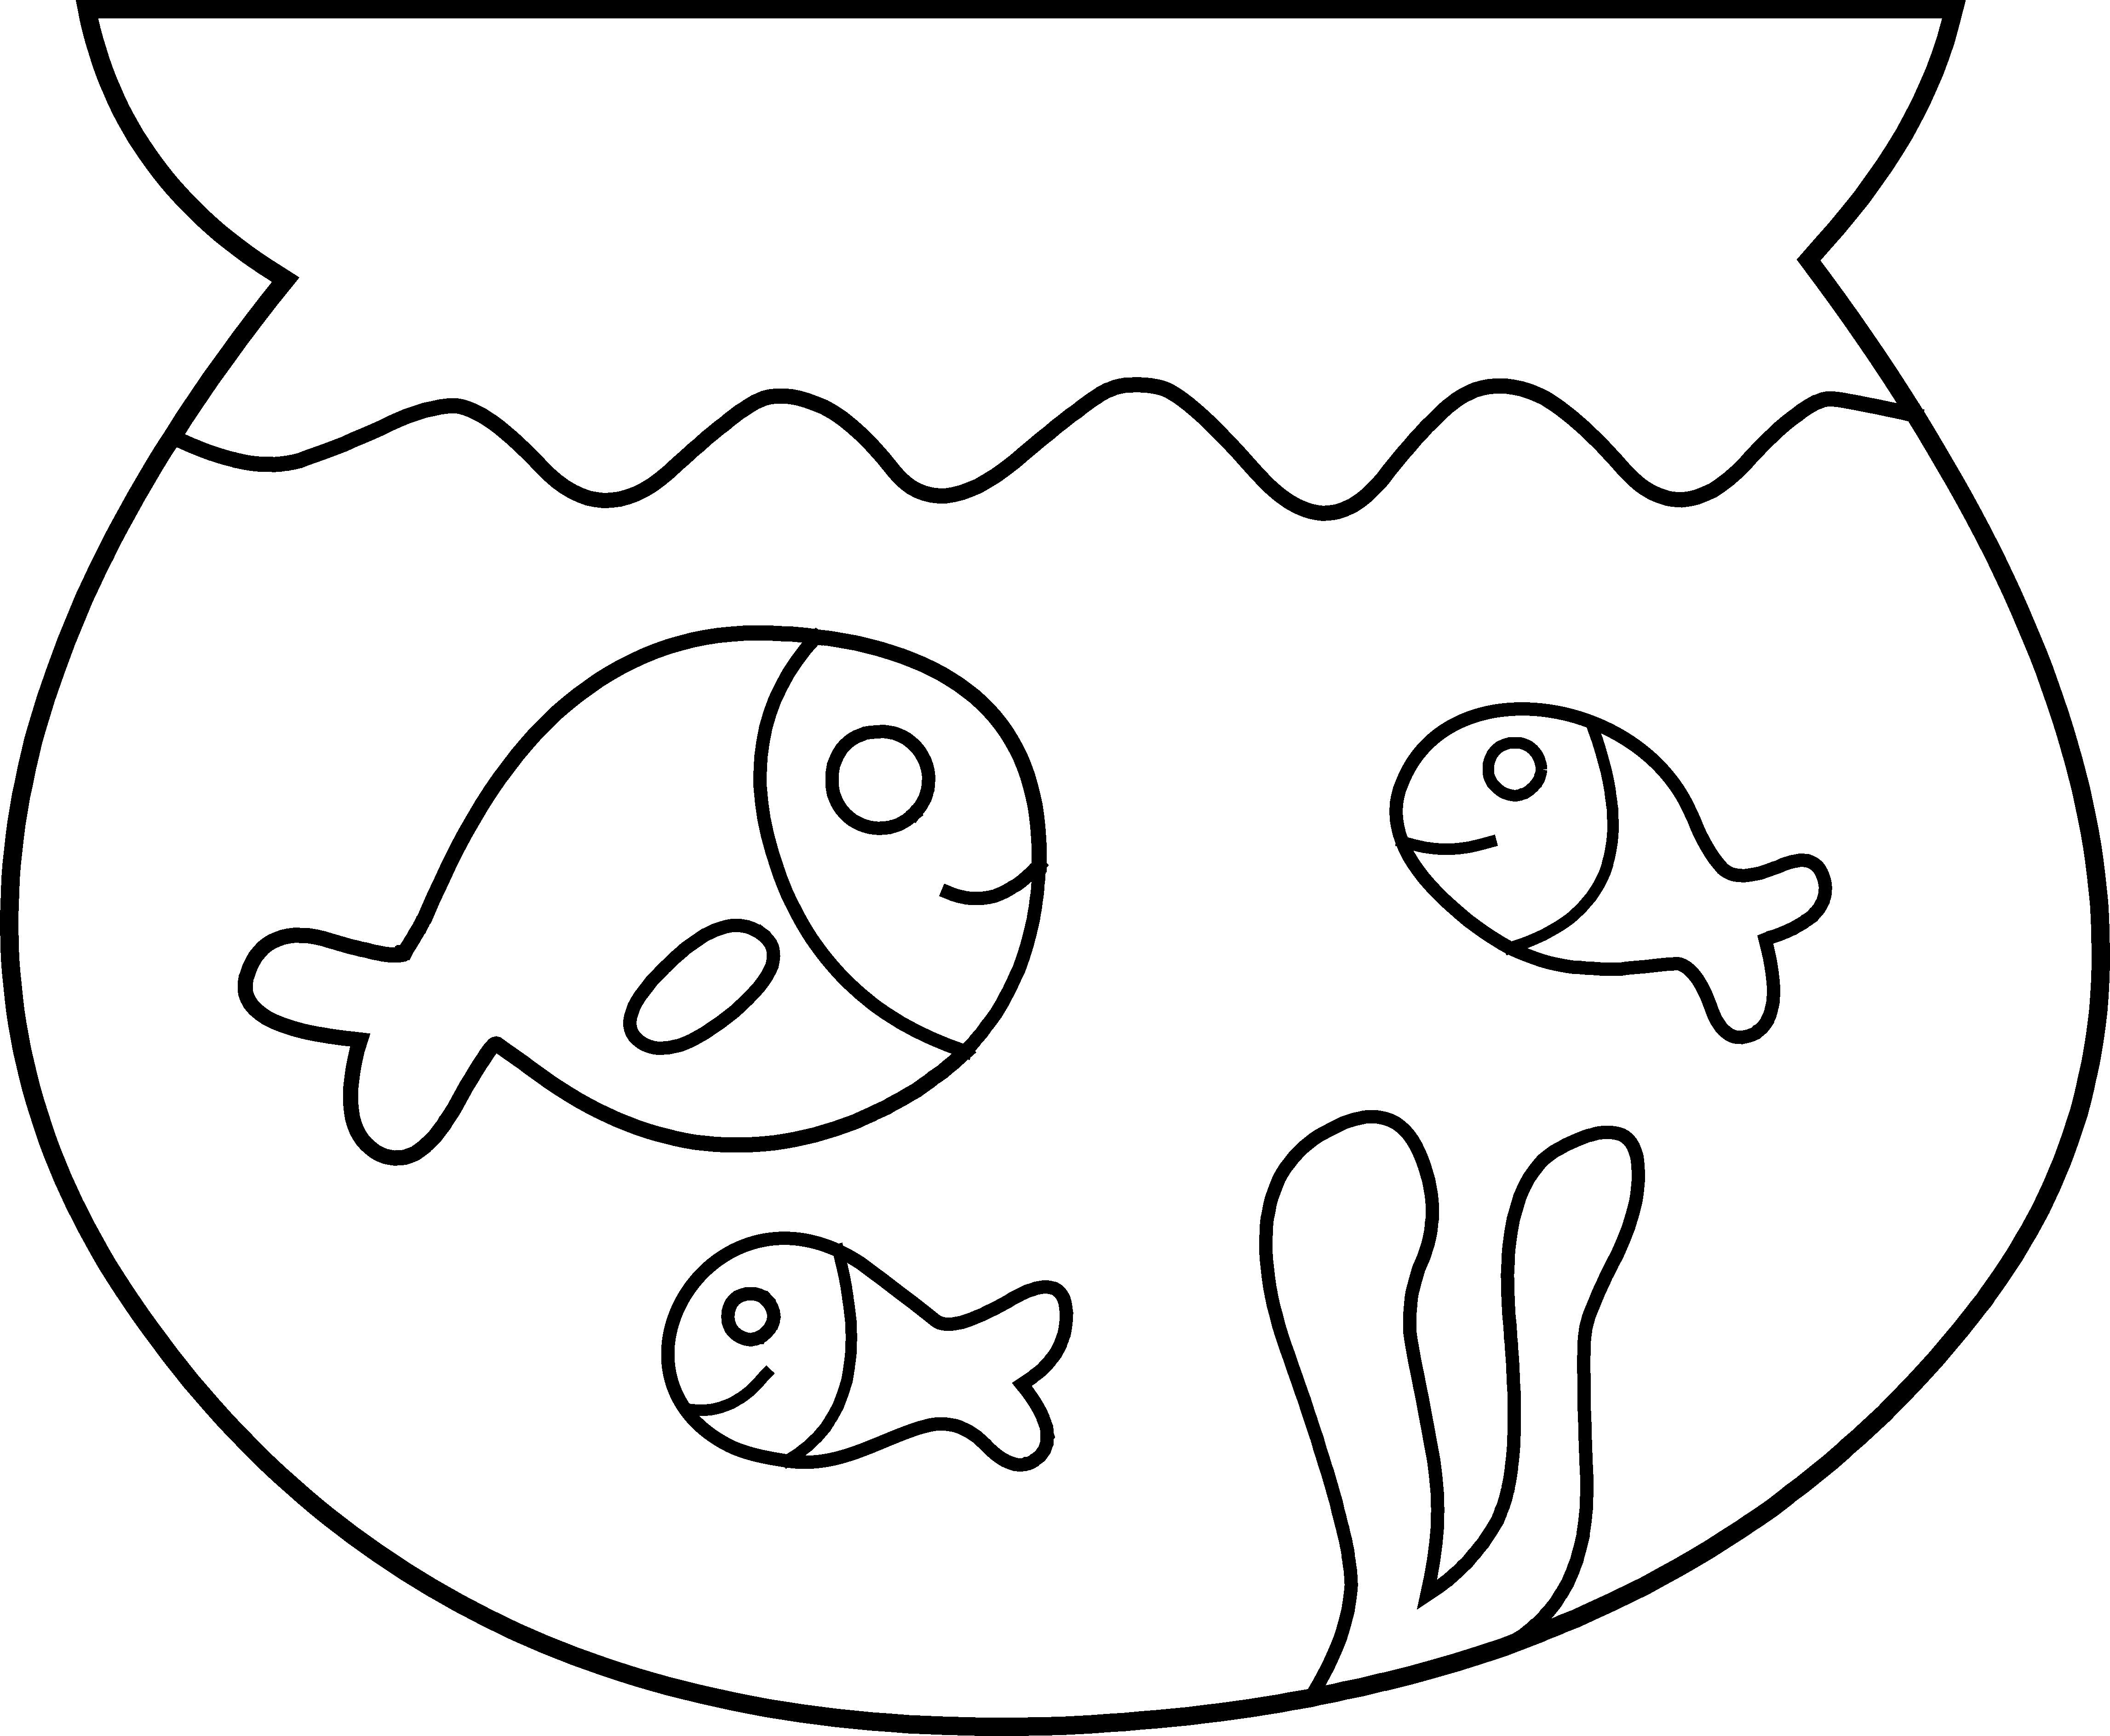 Cute fish clip art. Mexico clipart black and white